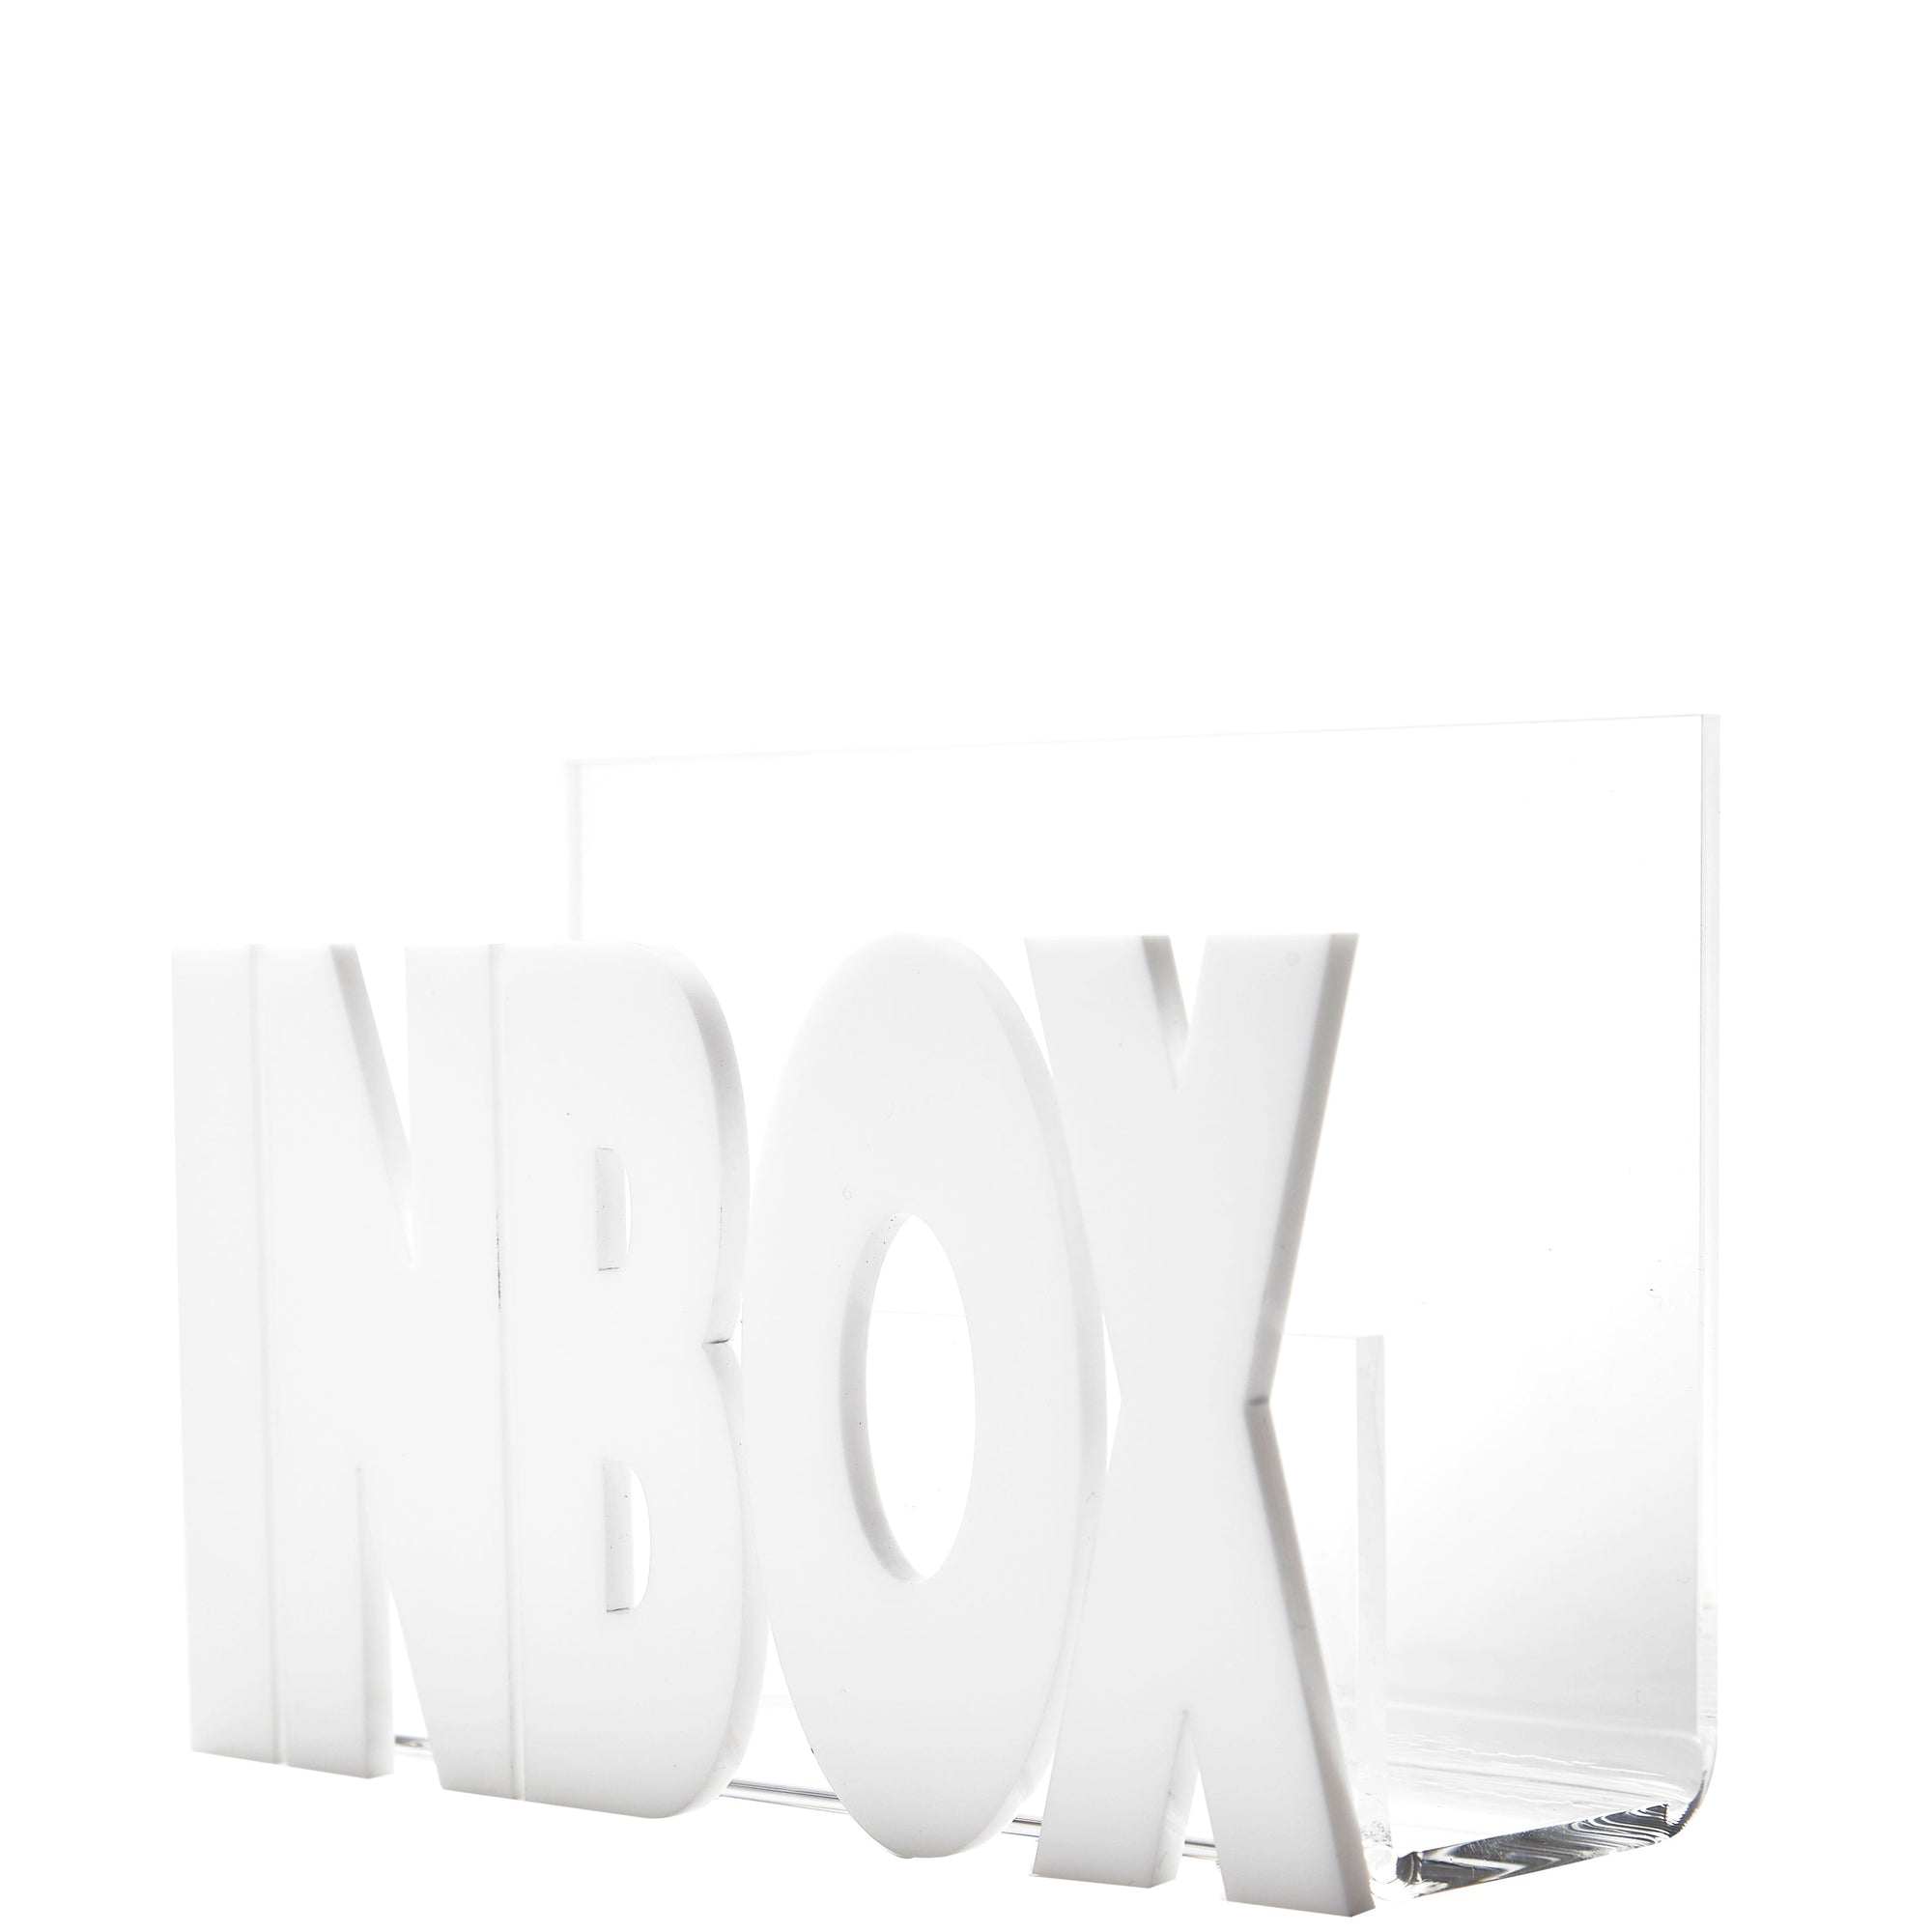 Box INBOX White 7 inches length 